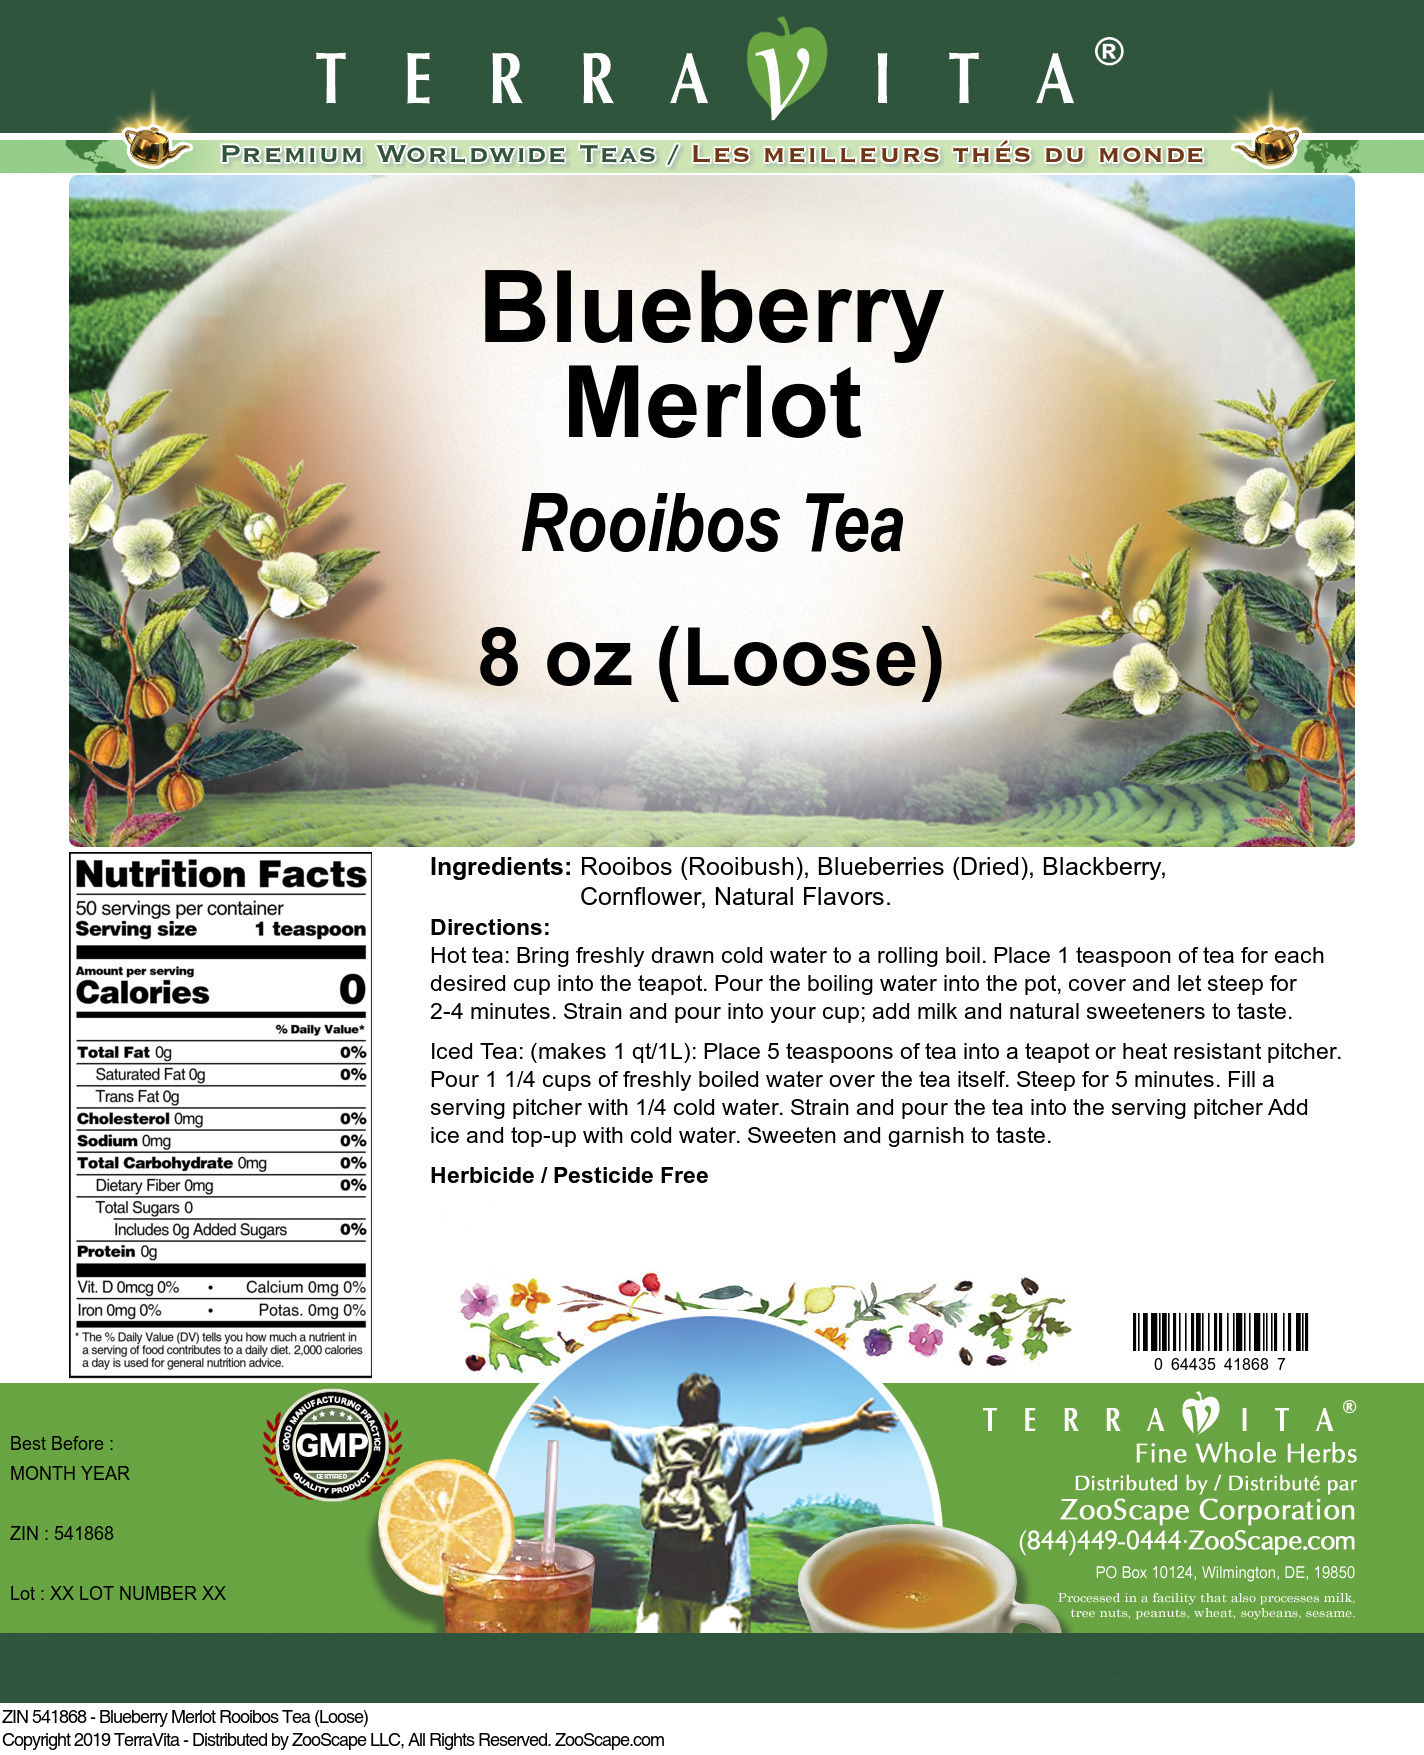 Blueberry Merlot Rooibos Tea (Loose) - Label